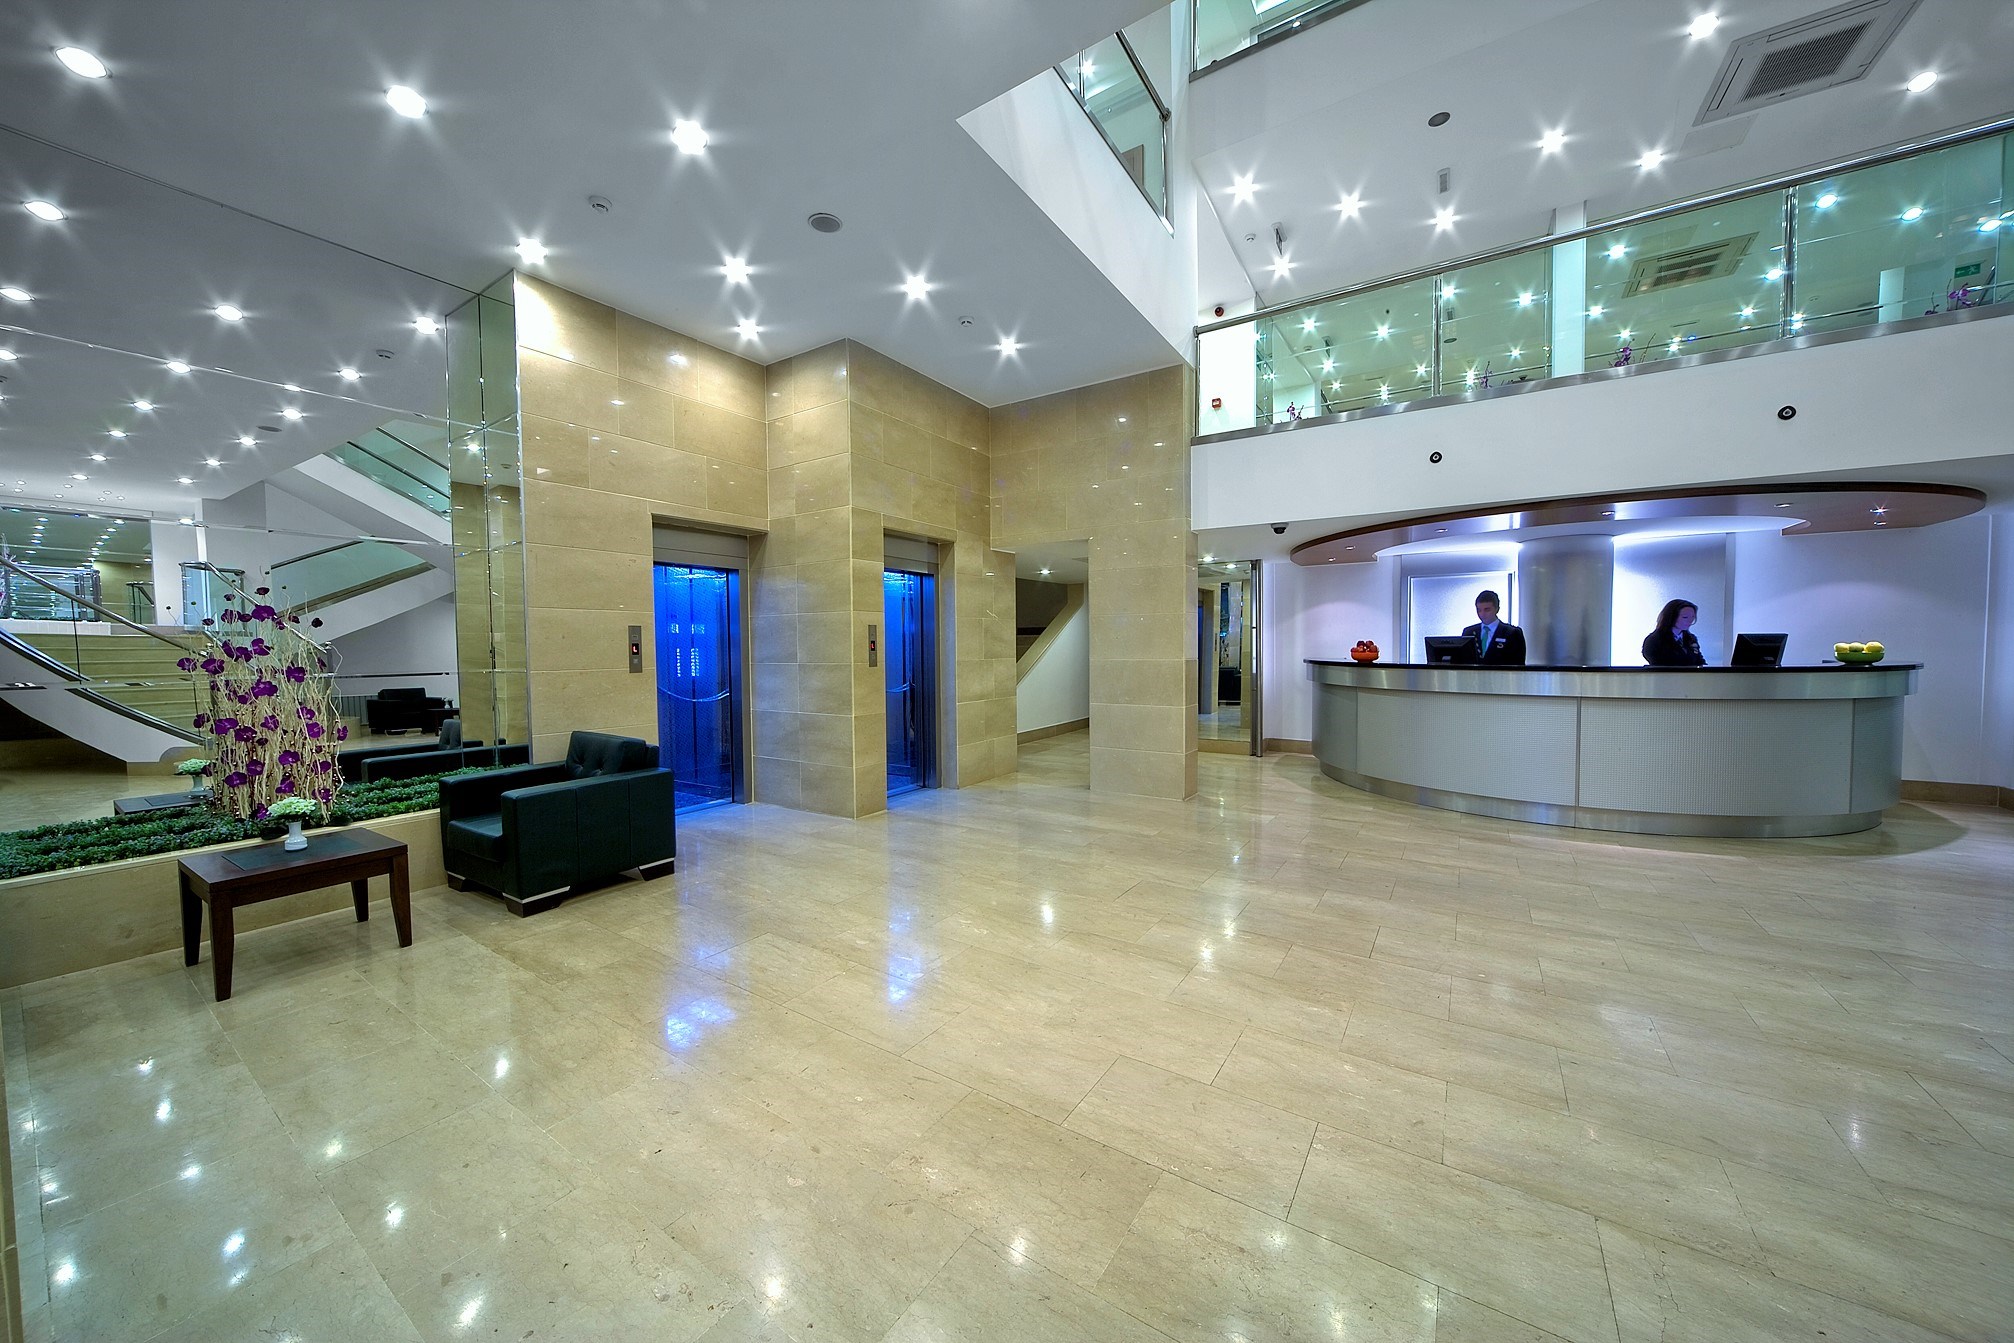 SV Business Hotel Diyarbakır